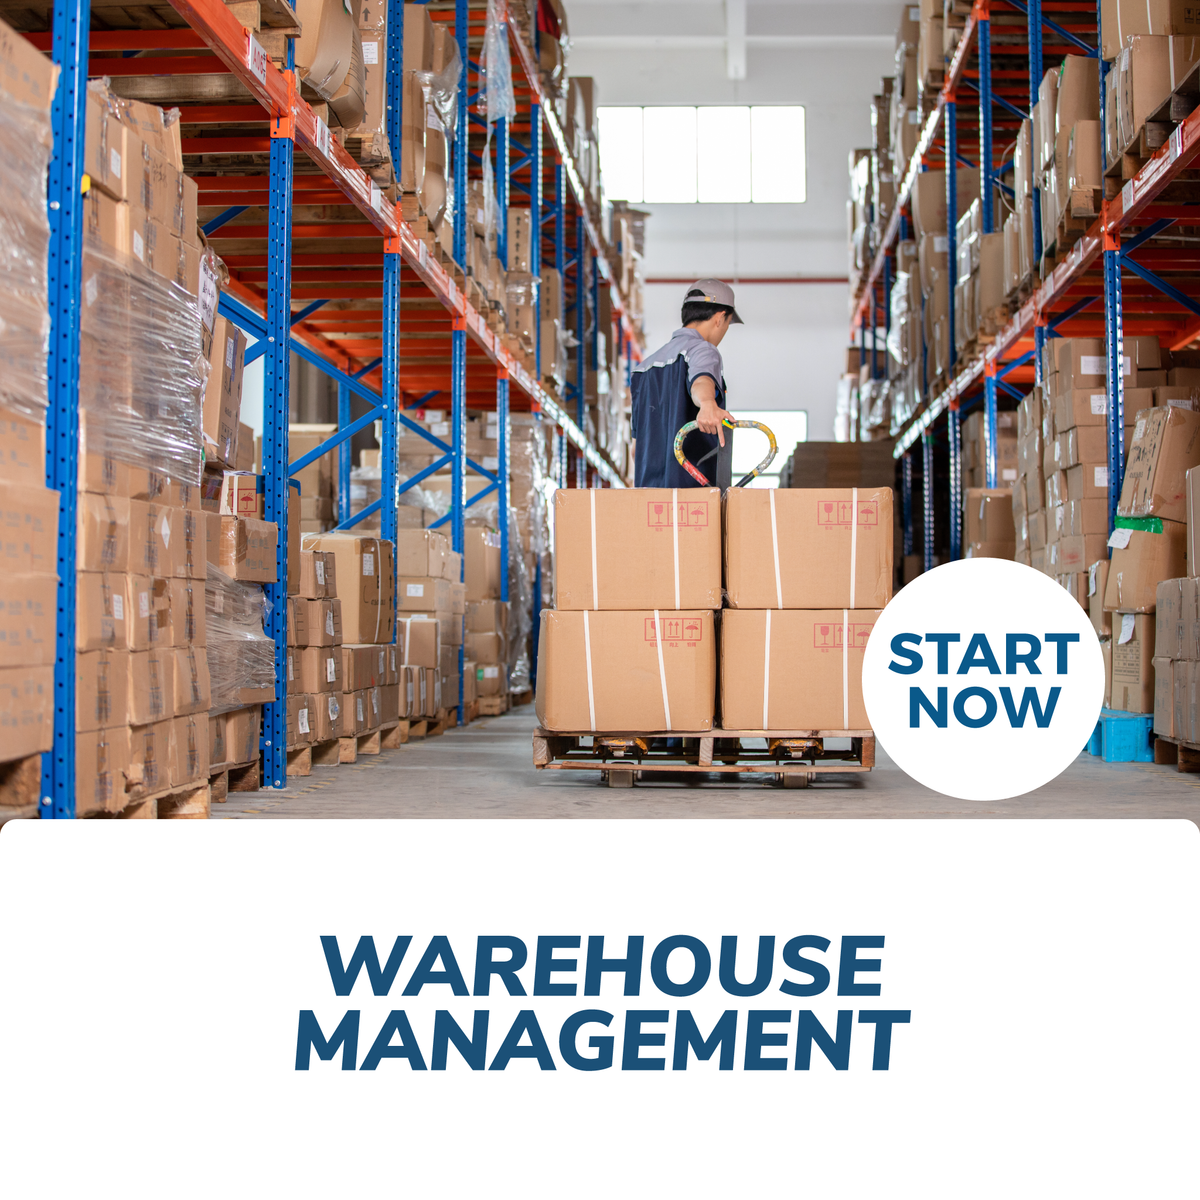 Warehouse Management Certification Training Online Courses For Success